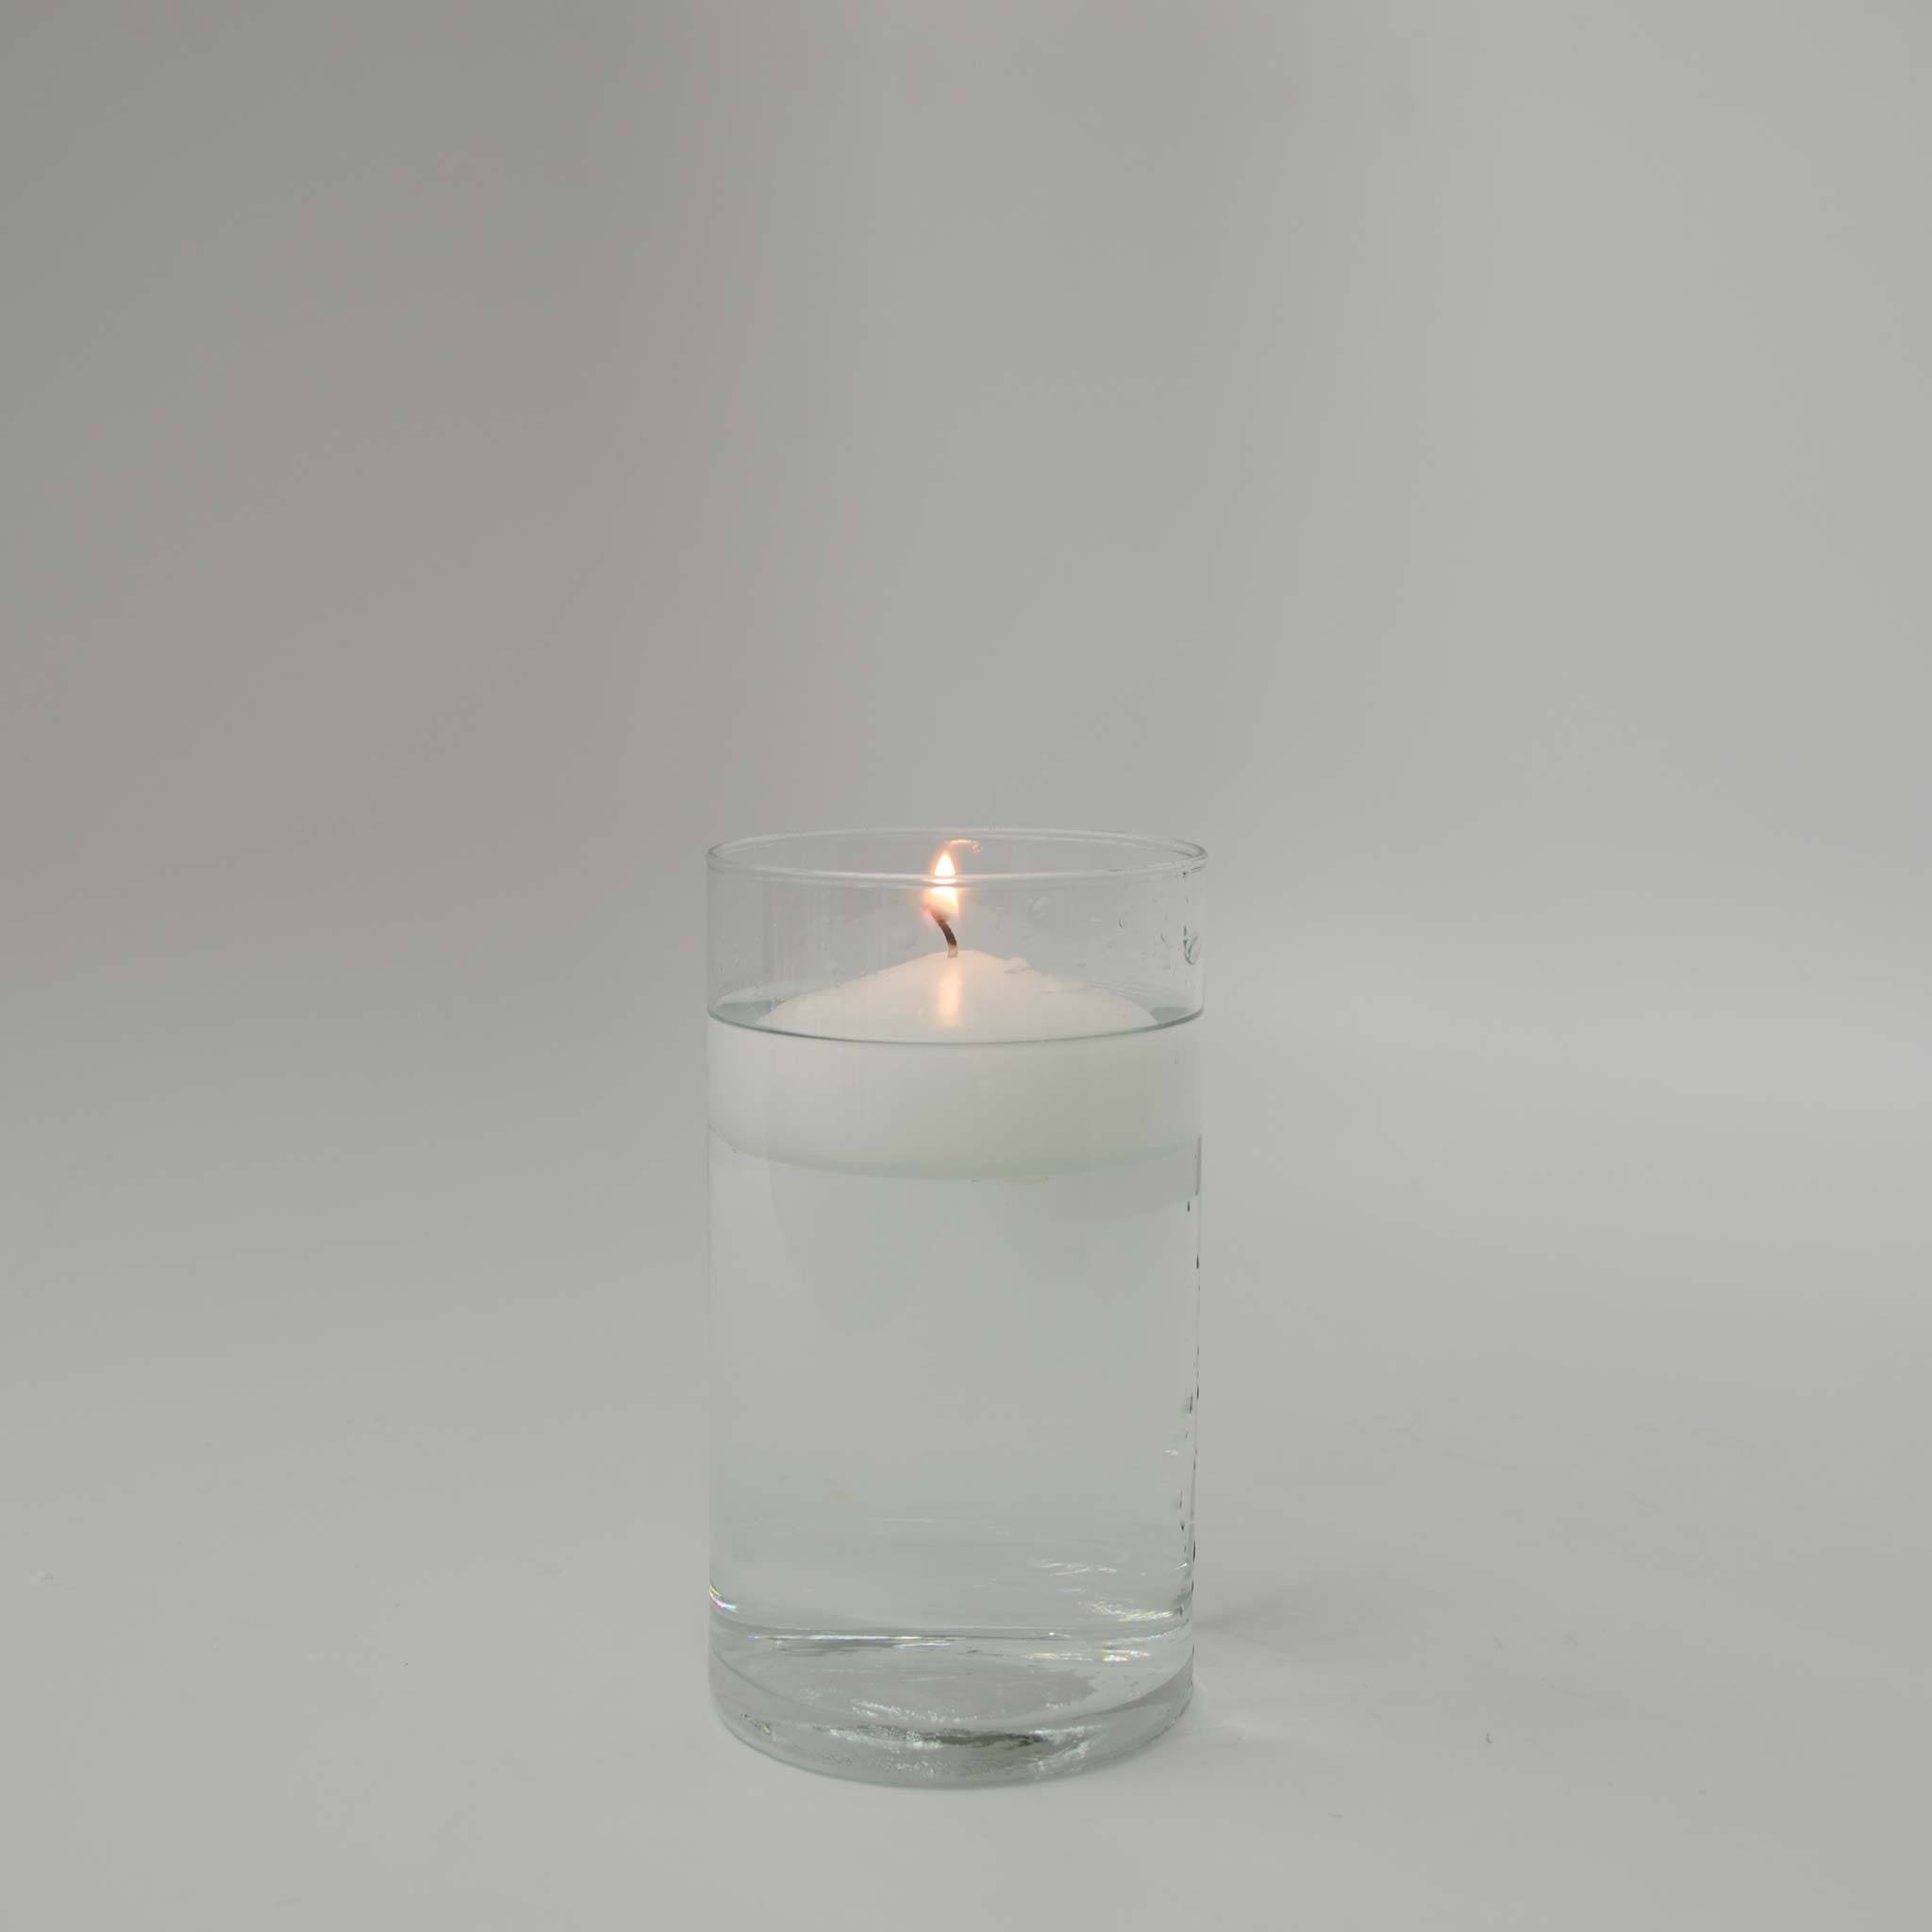 Buy White Floating Candle 3